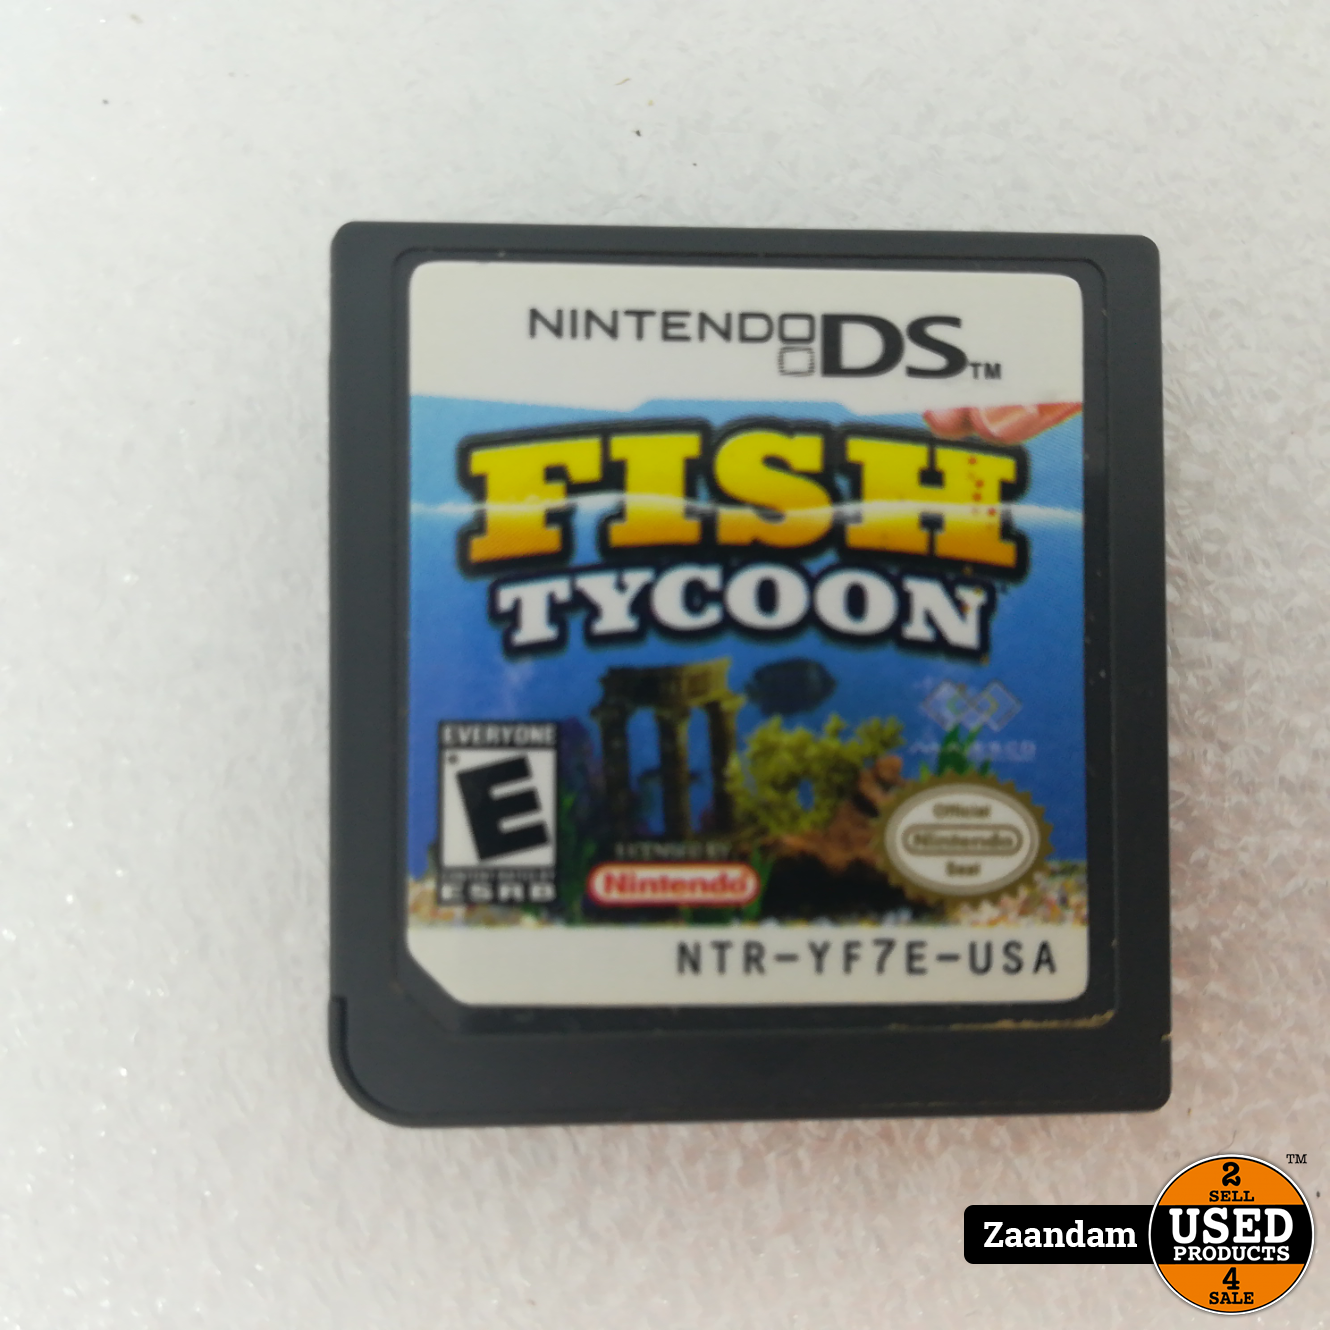 Variant snijden schaduw Nintendo DS Game: Fish Tycoon - Used Products Zaandam